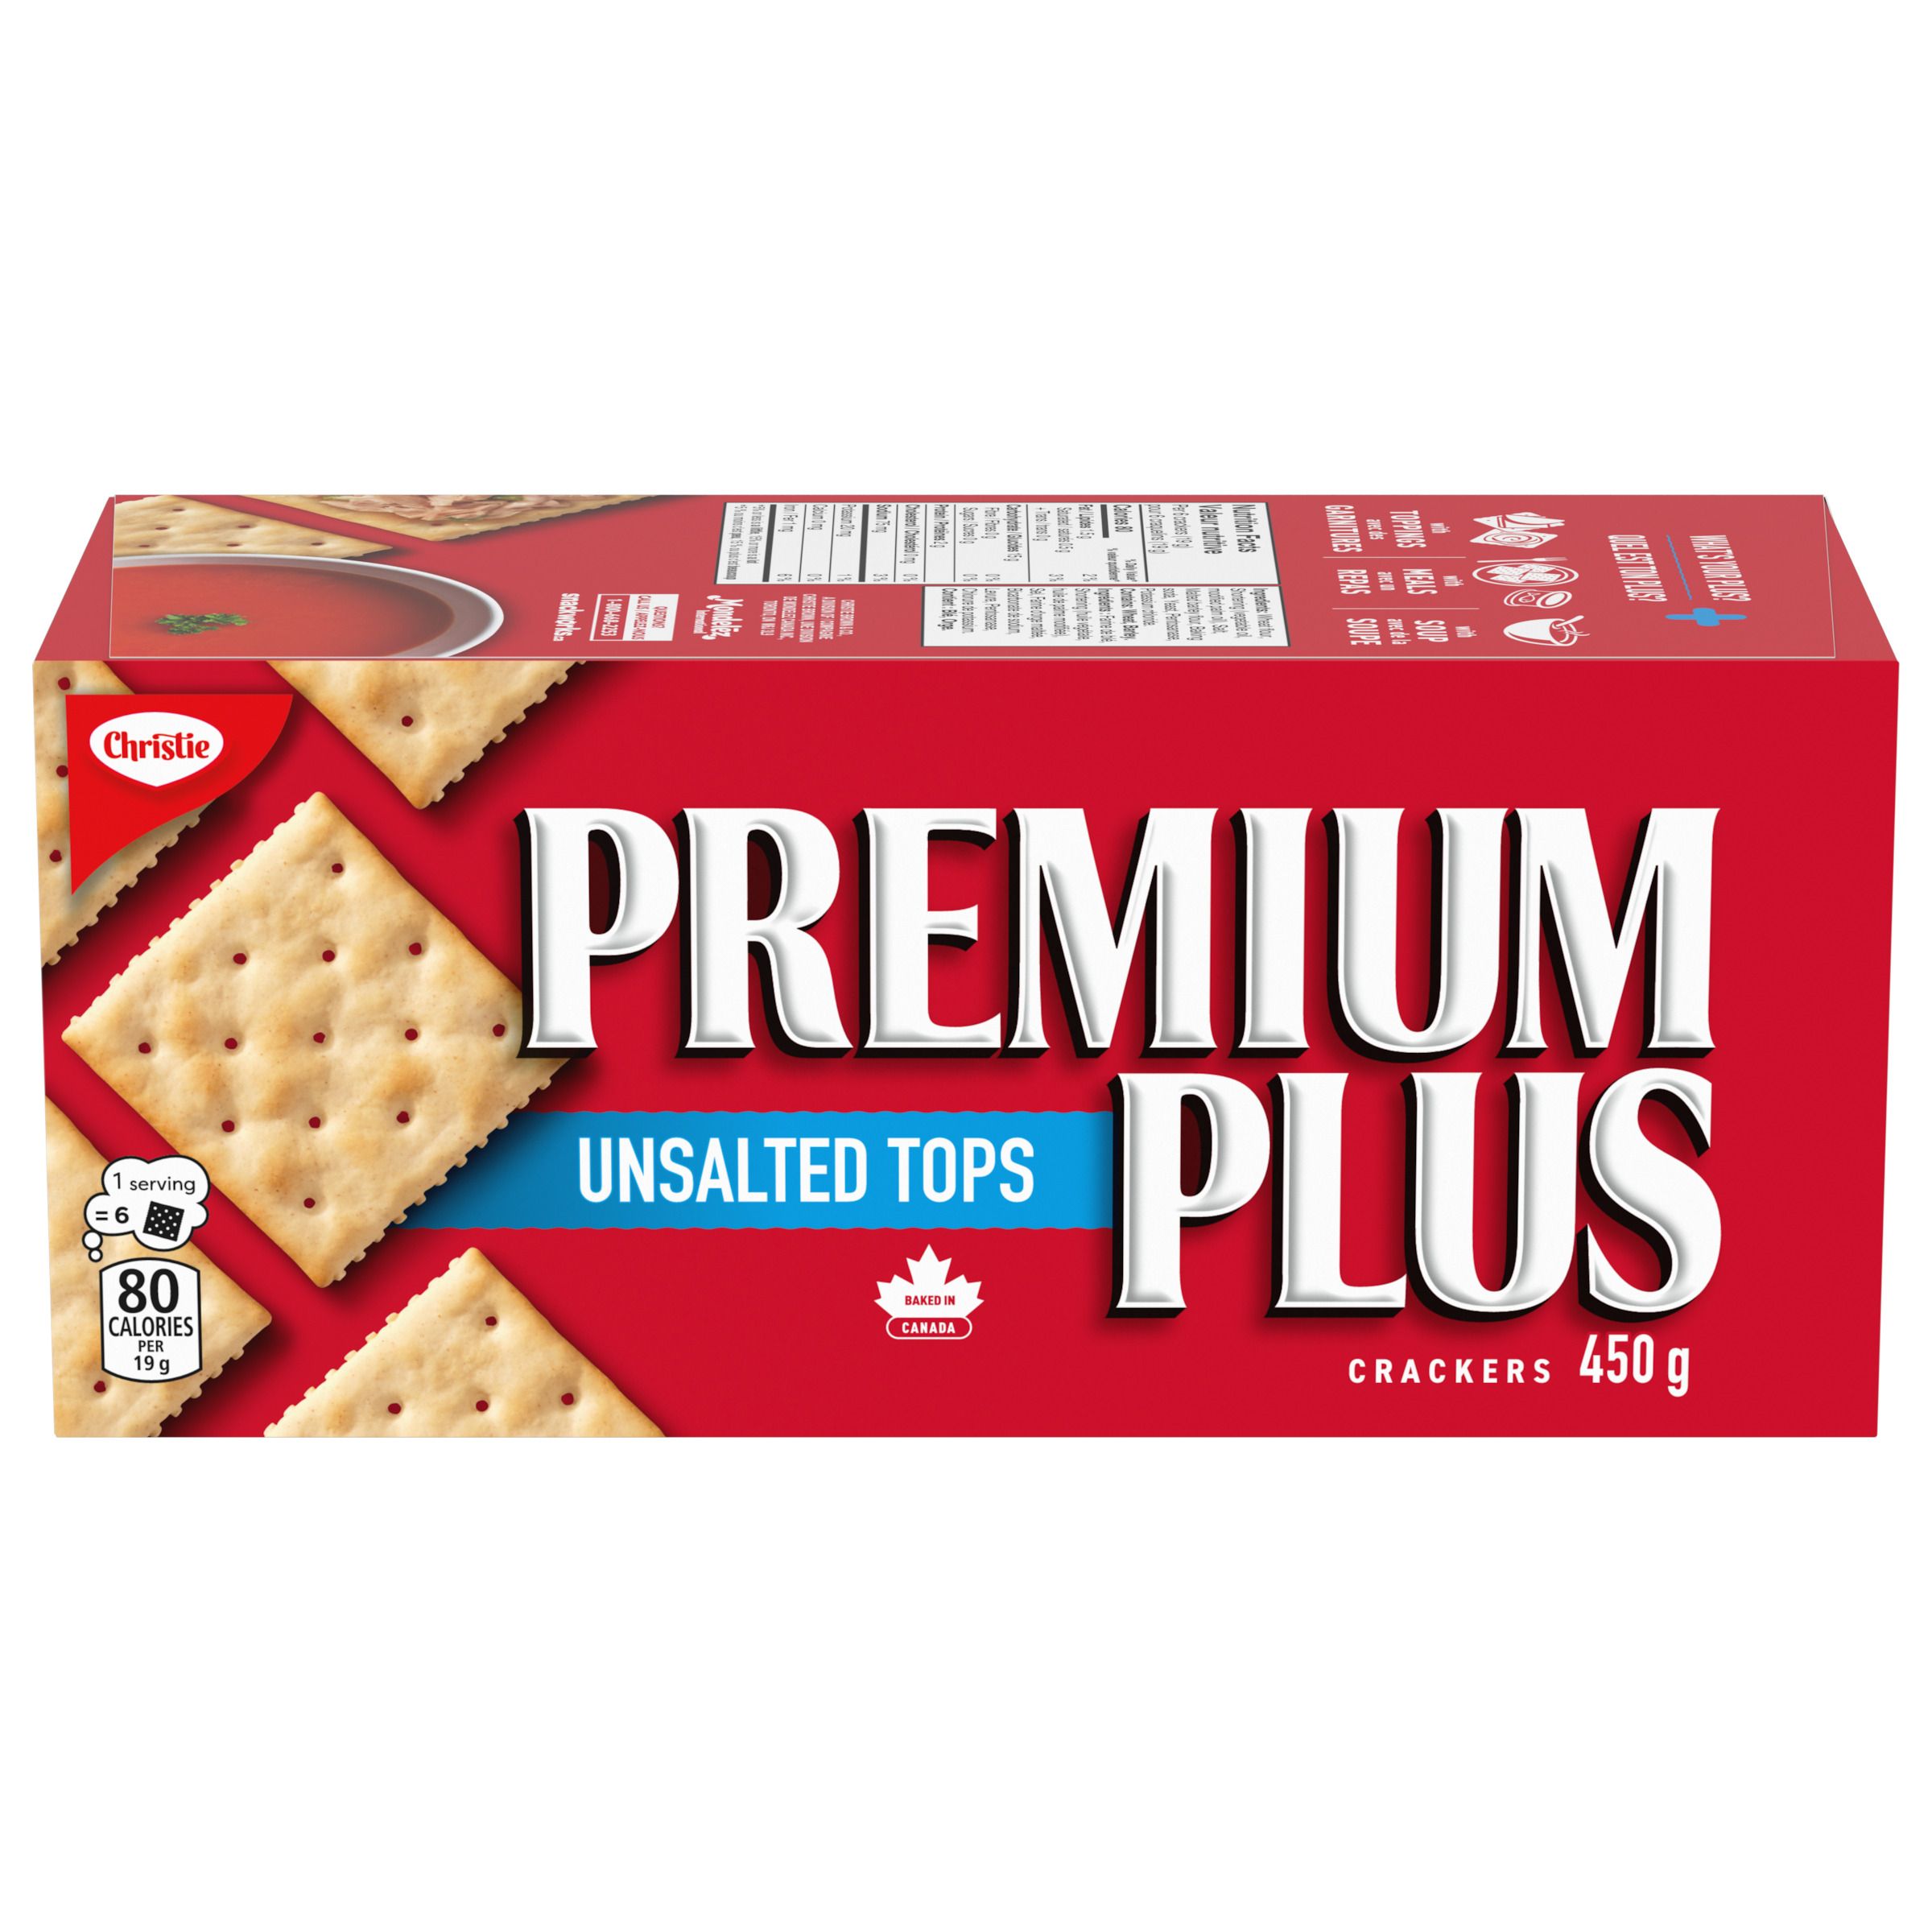 Premium Plus Unsalted Tops Crackers 450 G